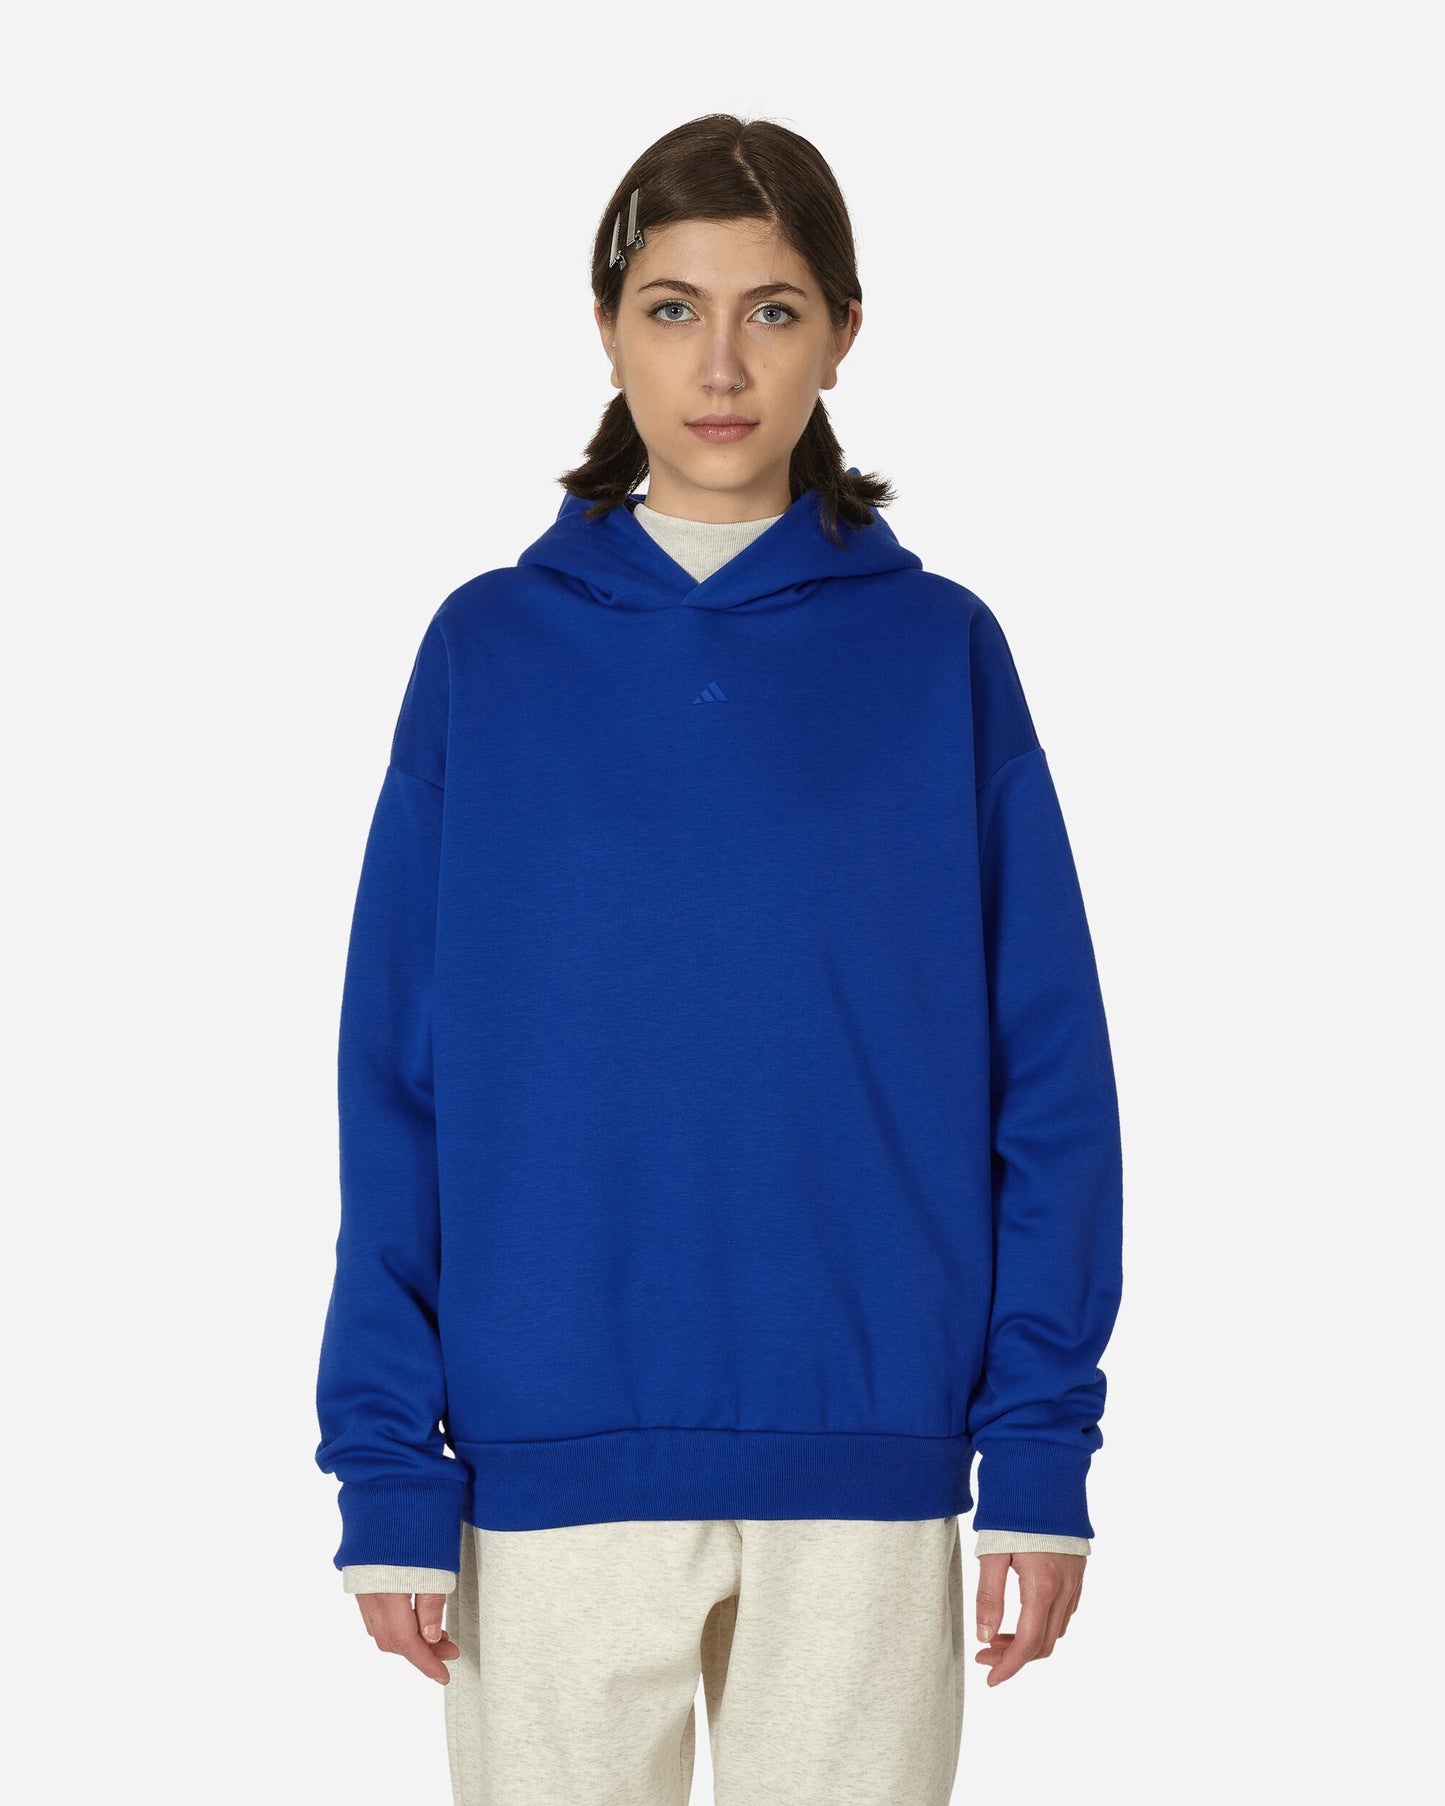 adidas One Fl Hoody Lucid Blue Sweatshirts Hoodies IX1961 001